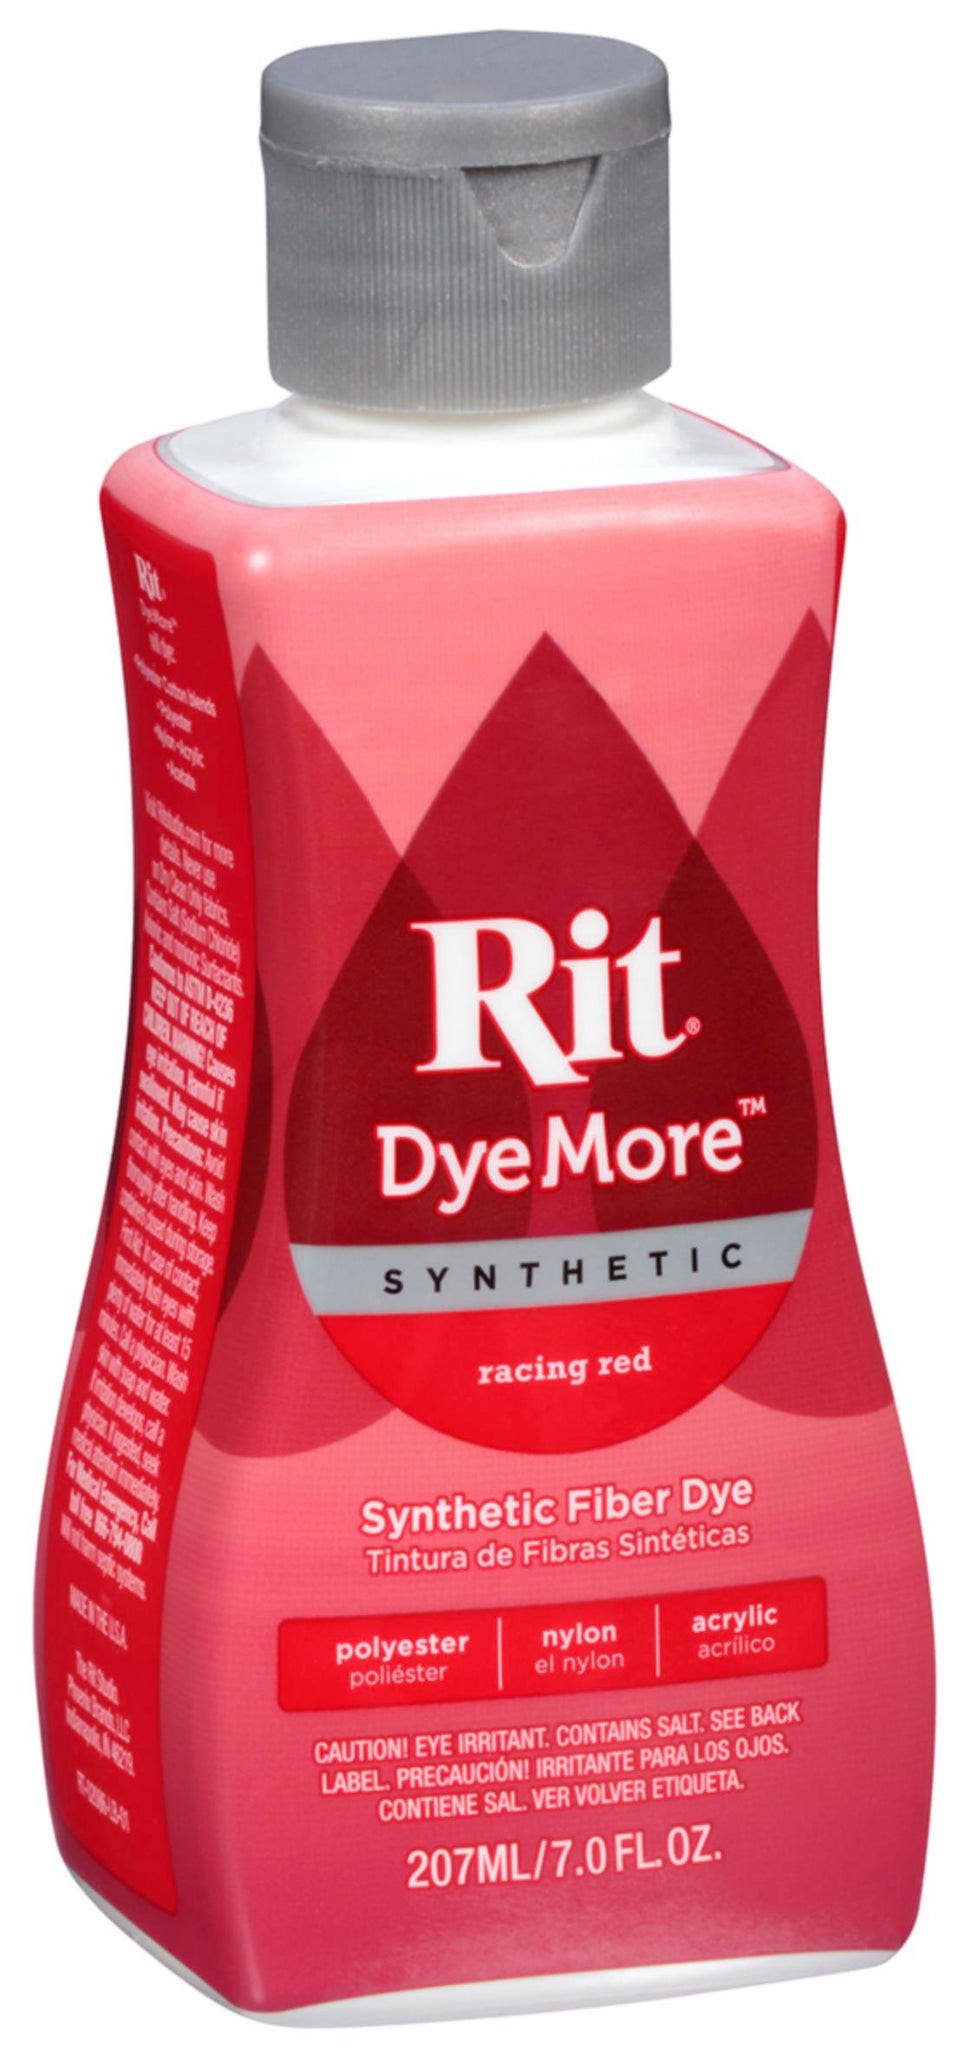 Rit DyeMore for Synthetics, Royal Purple, 7 fl.oz. 